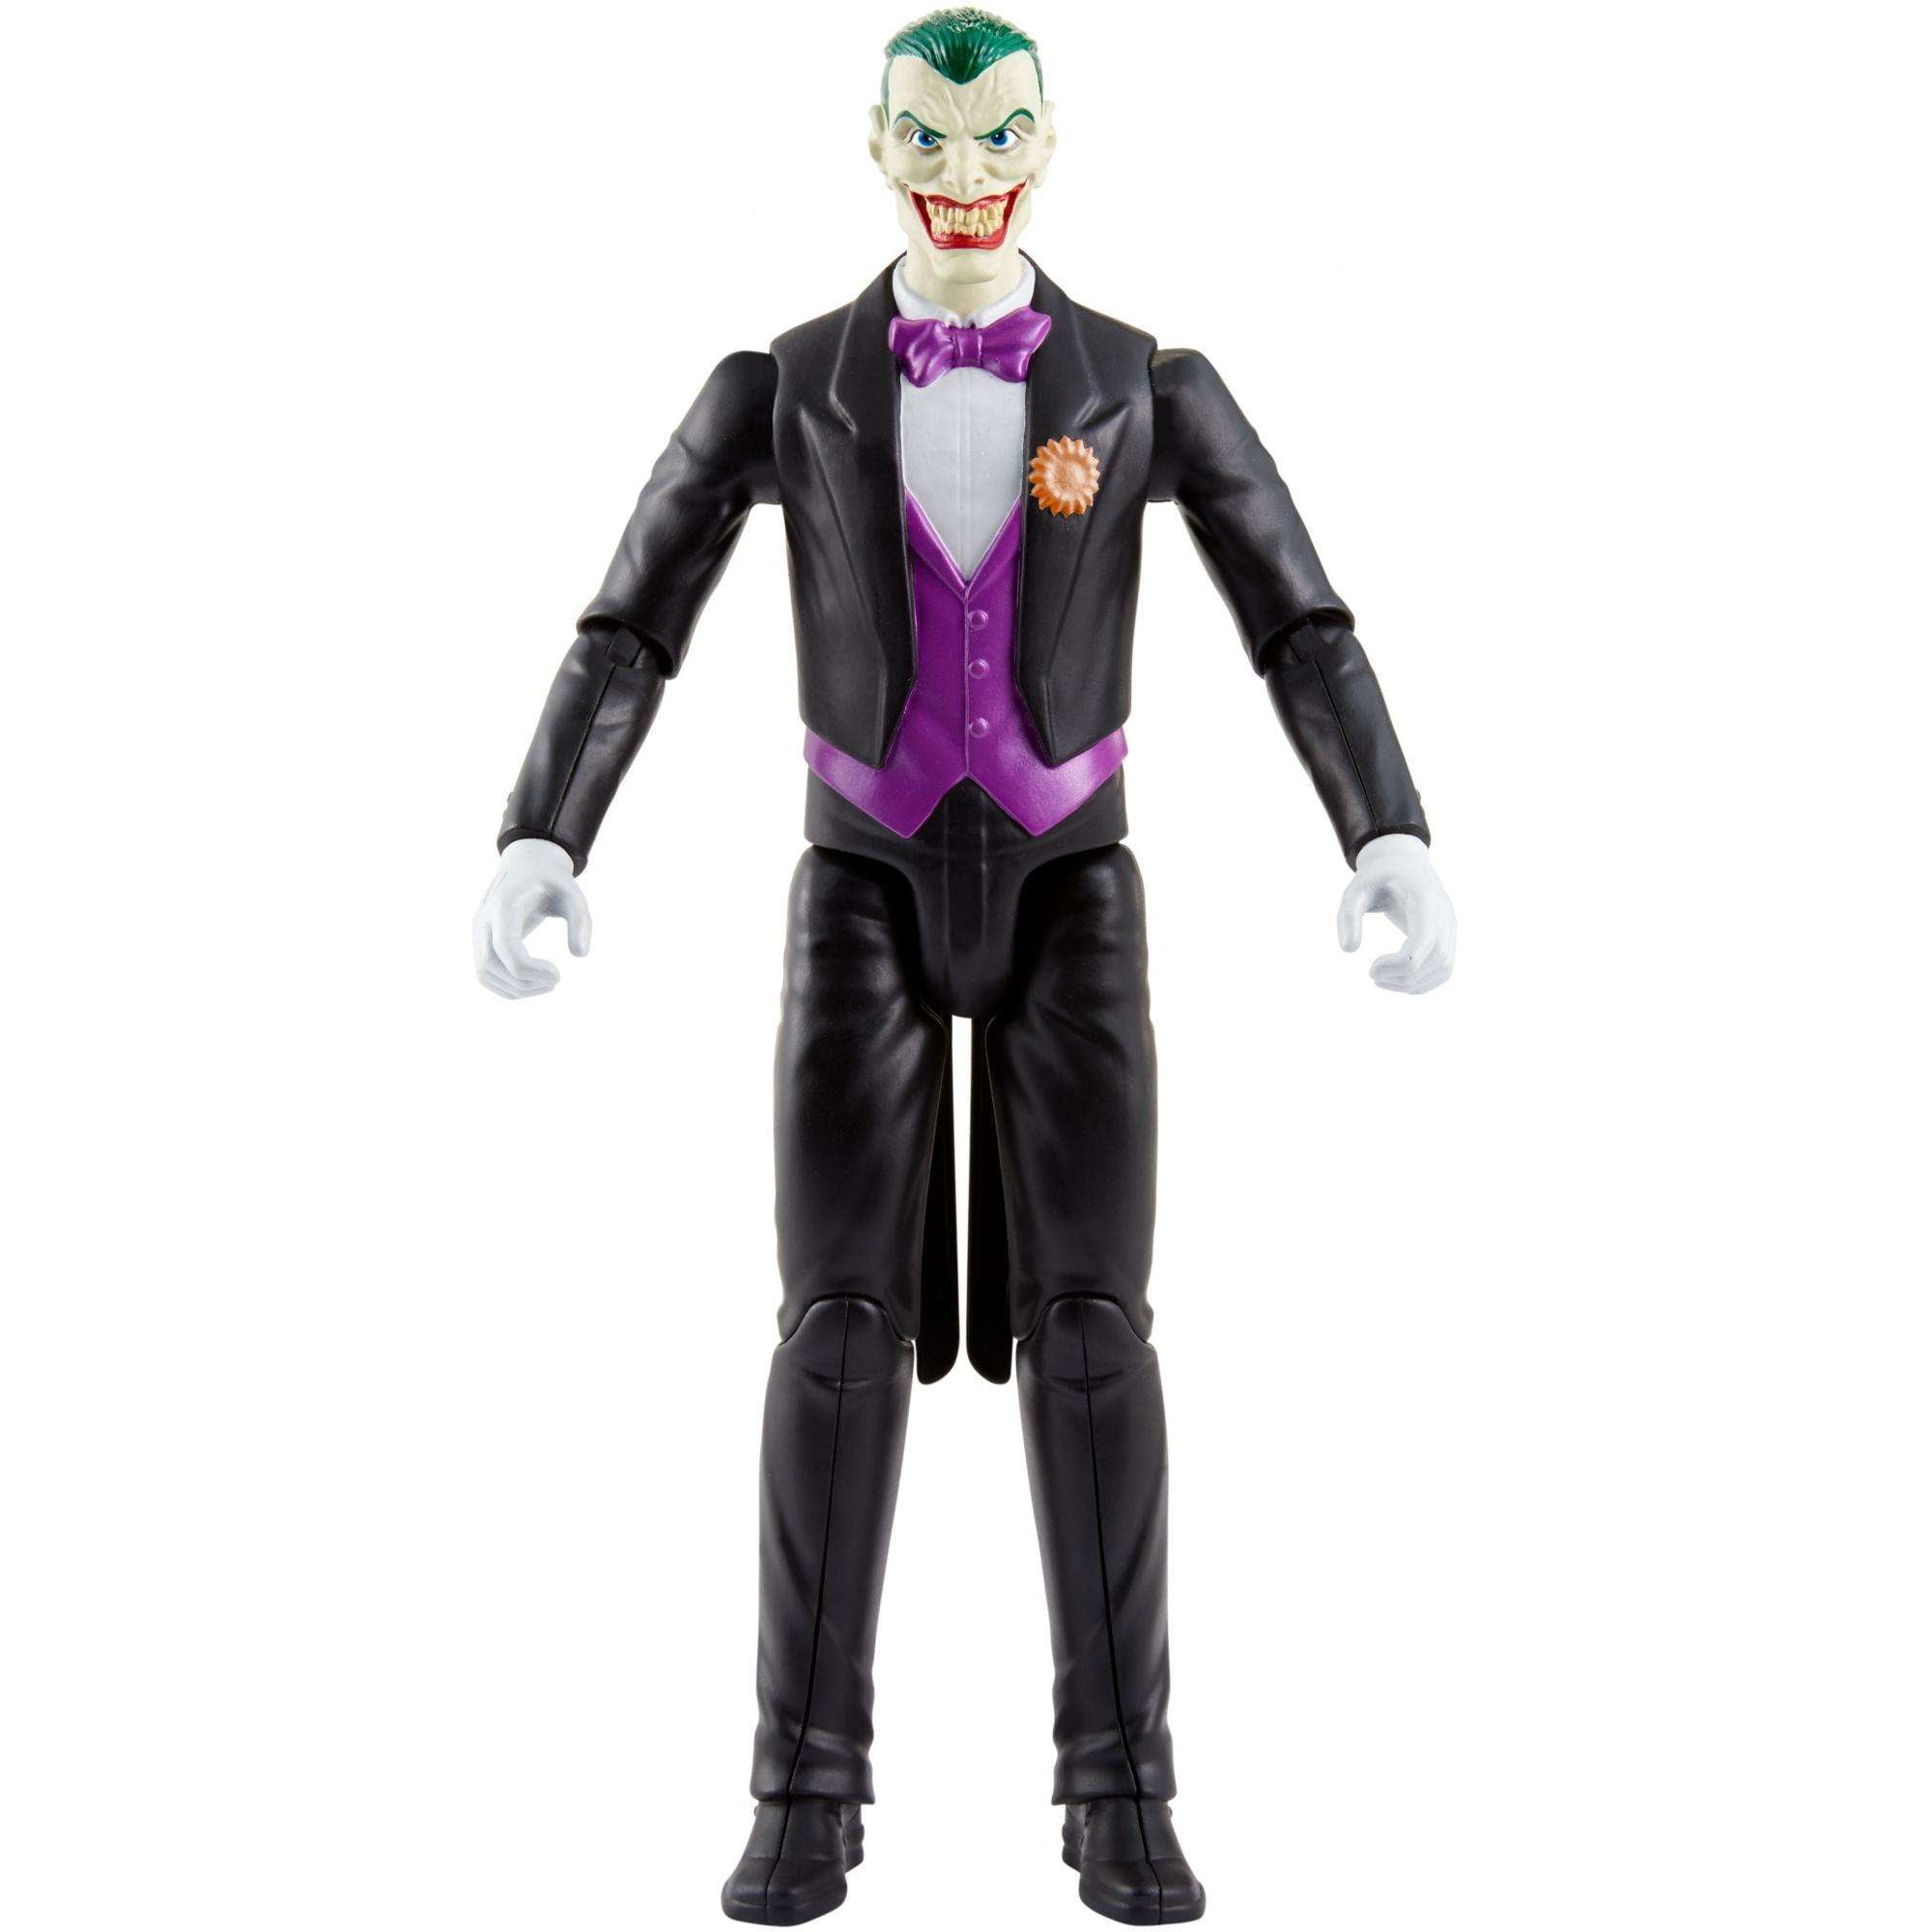 / 14 cm Joker action figure model DC Universe Batman rival figurine toy 5.5 in 